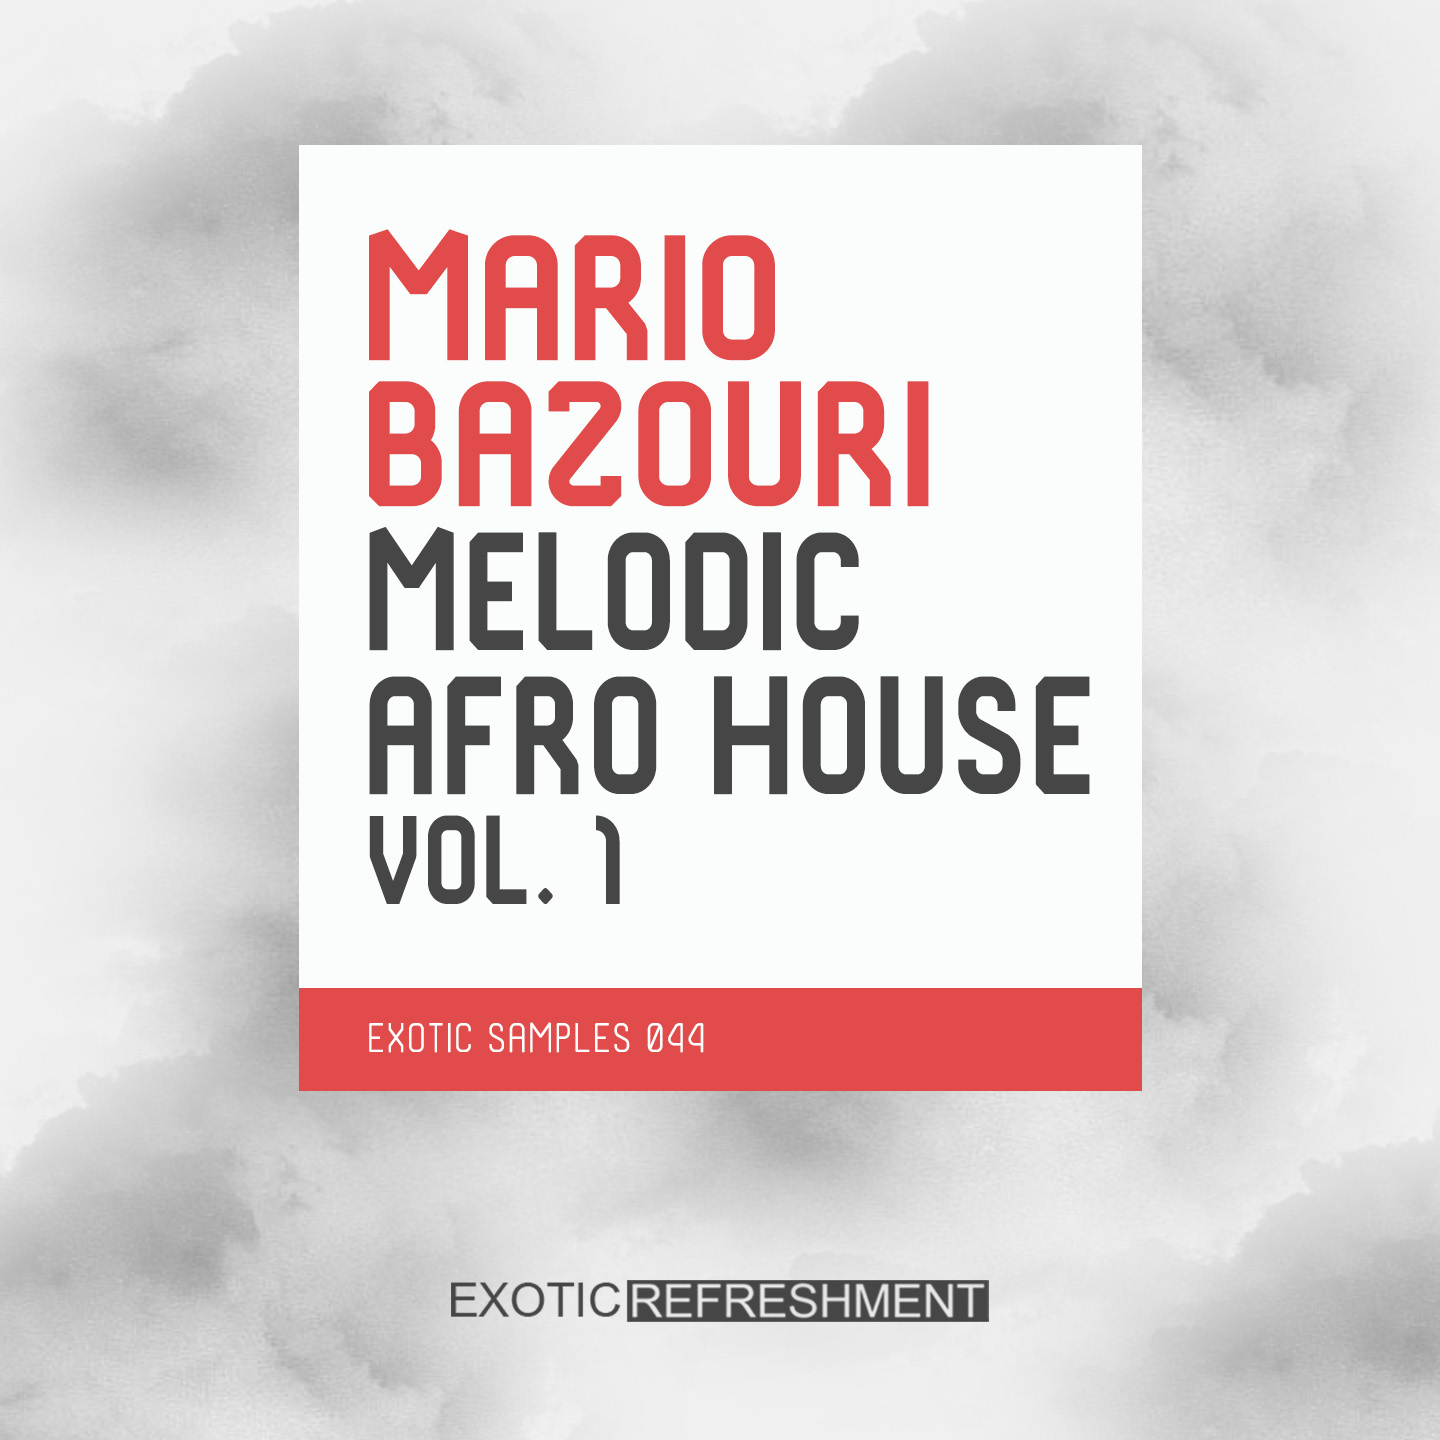 Mario Bazouri Melodic Afro House vol. 1